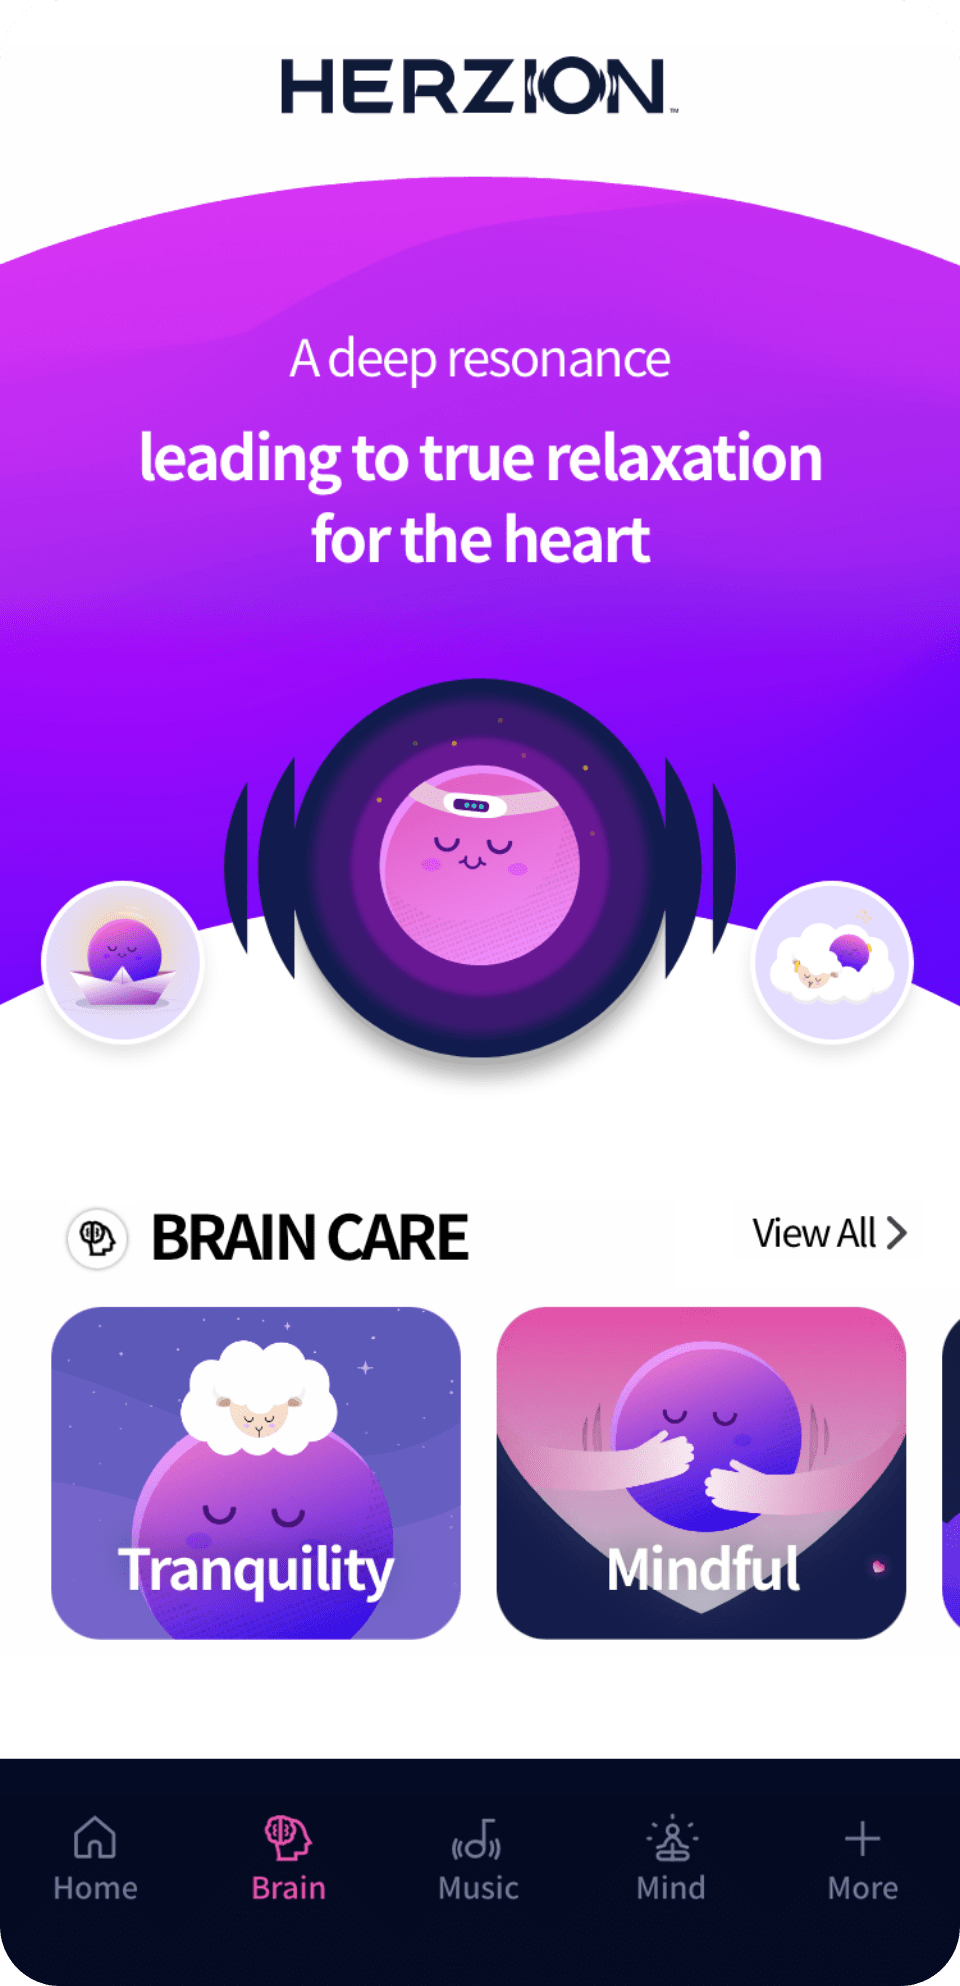 Brain care